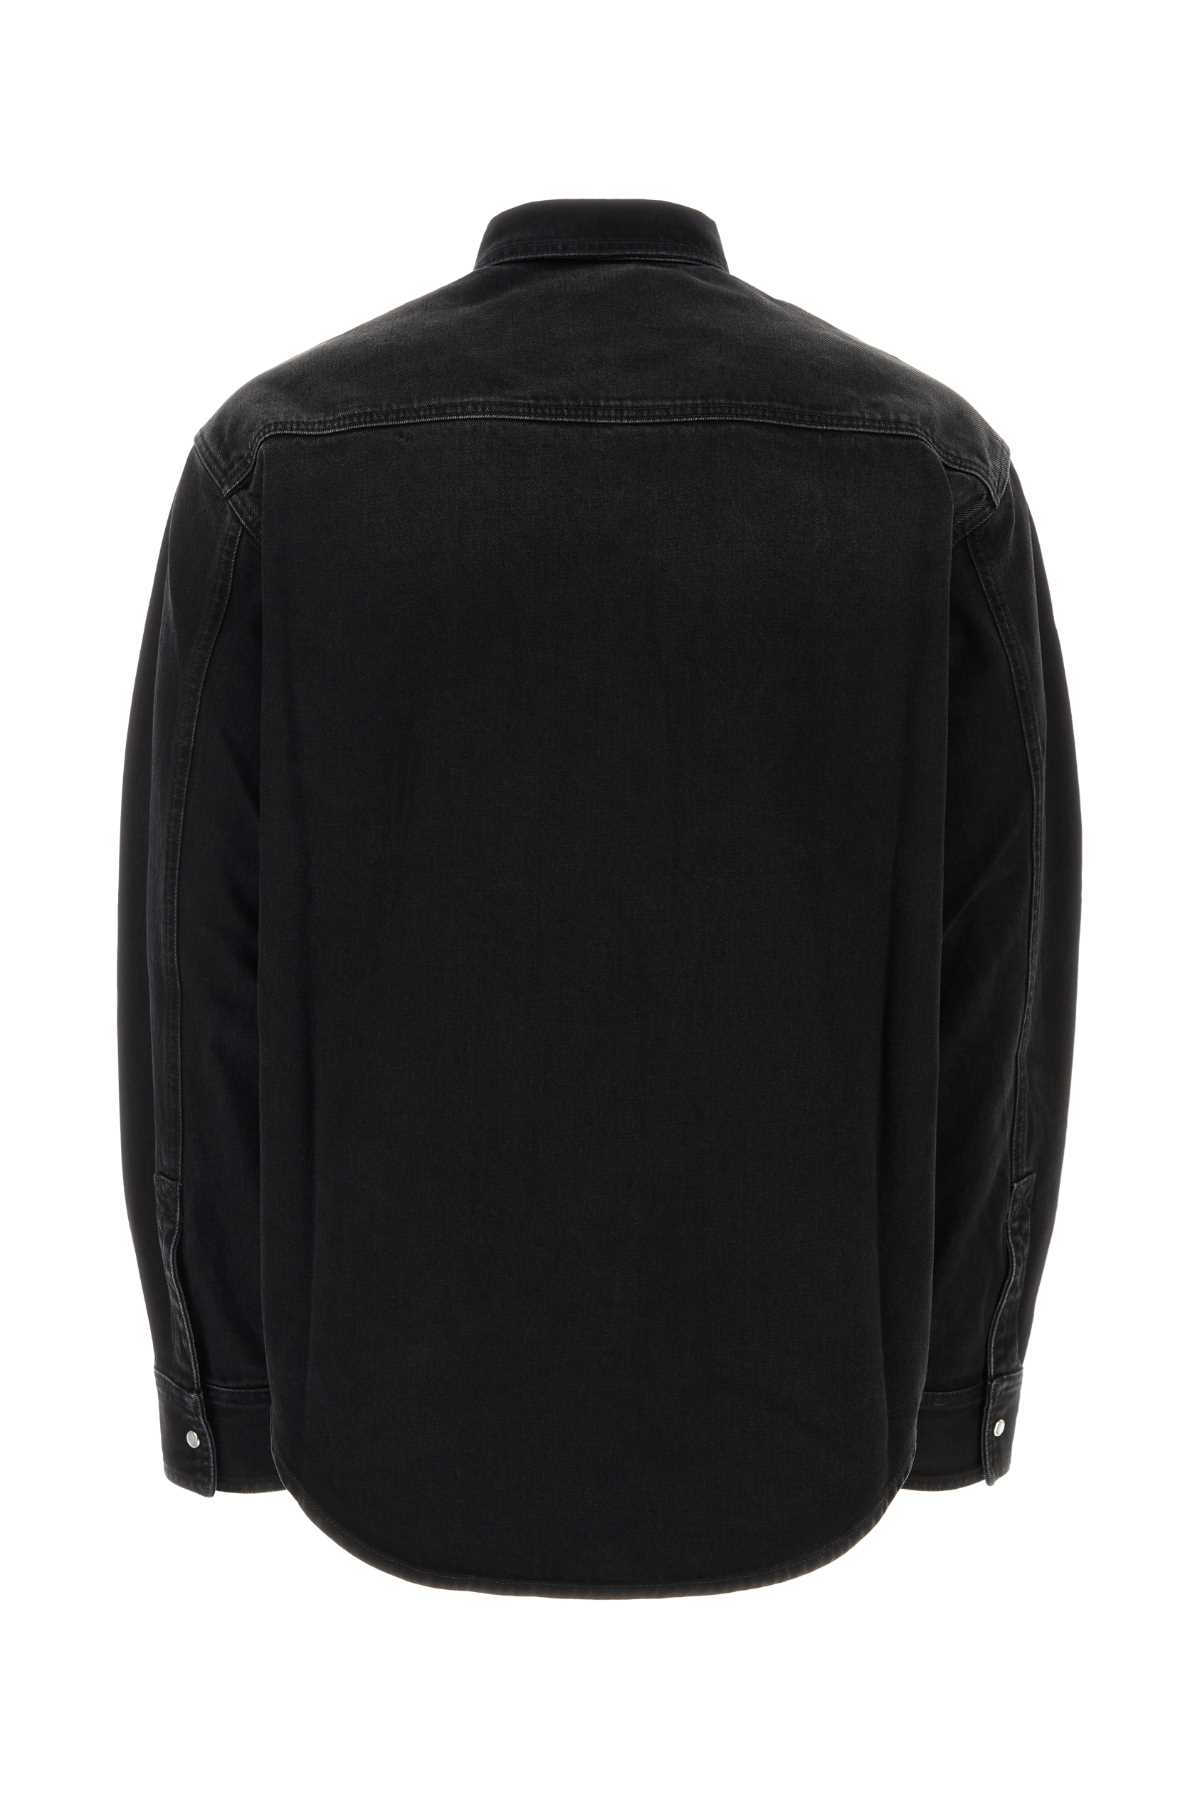 Shop Vetements Black Denim Shirt